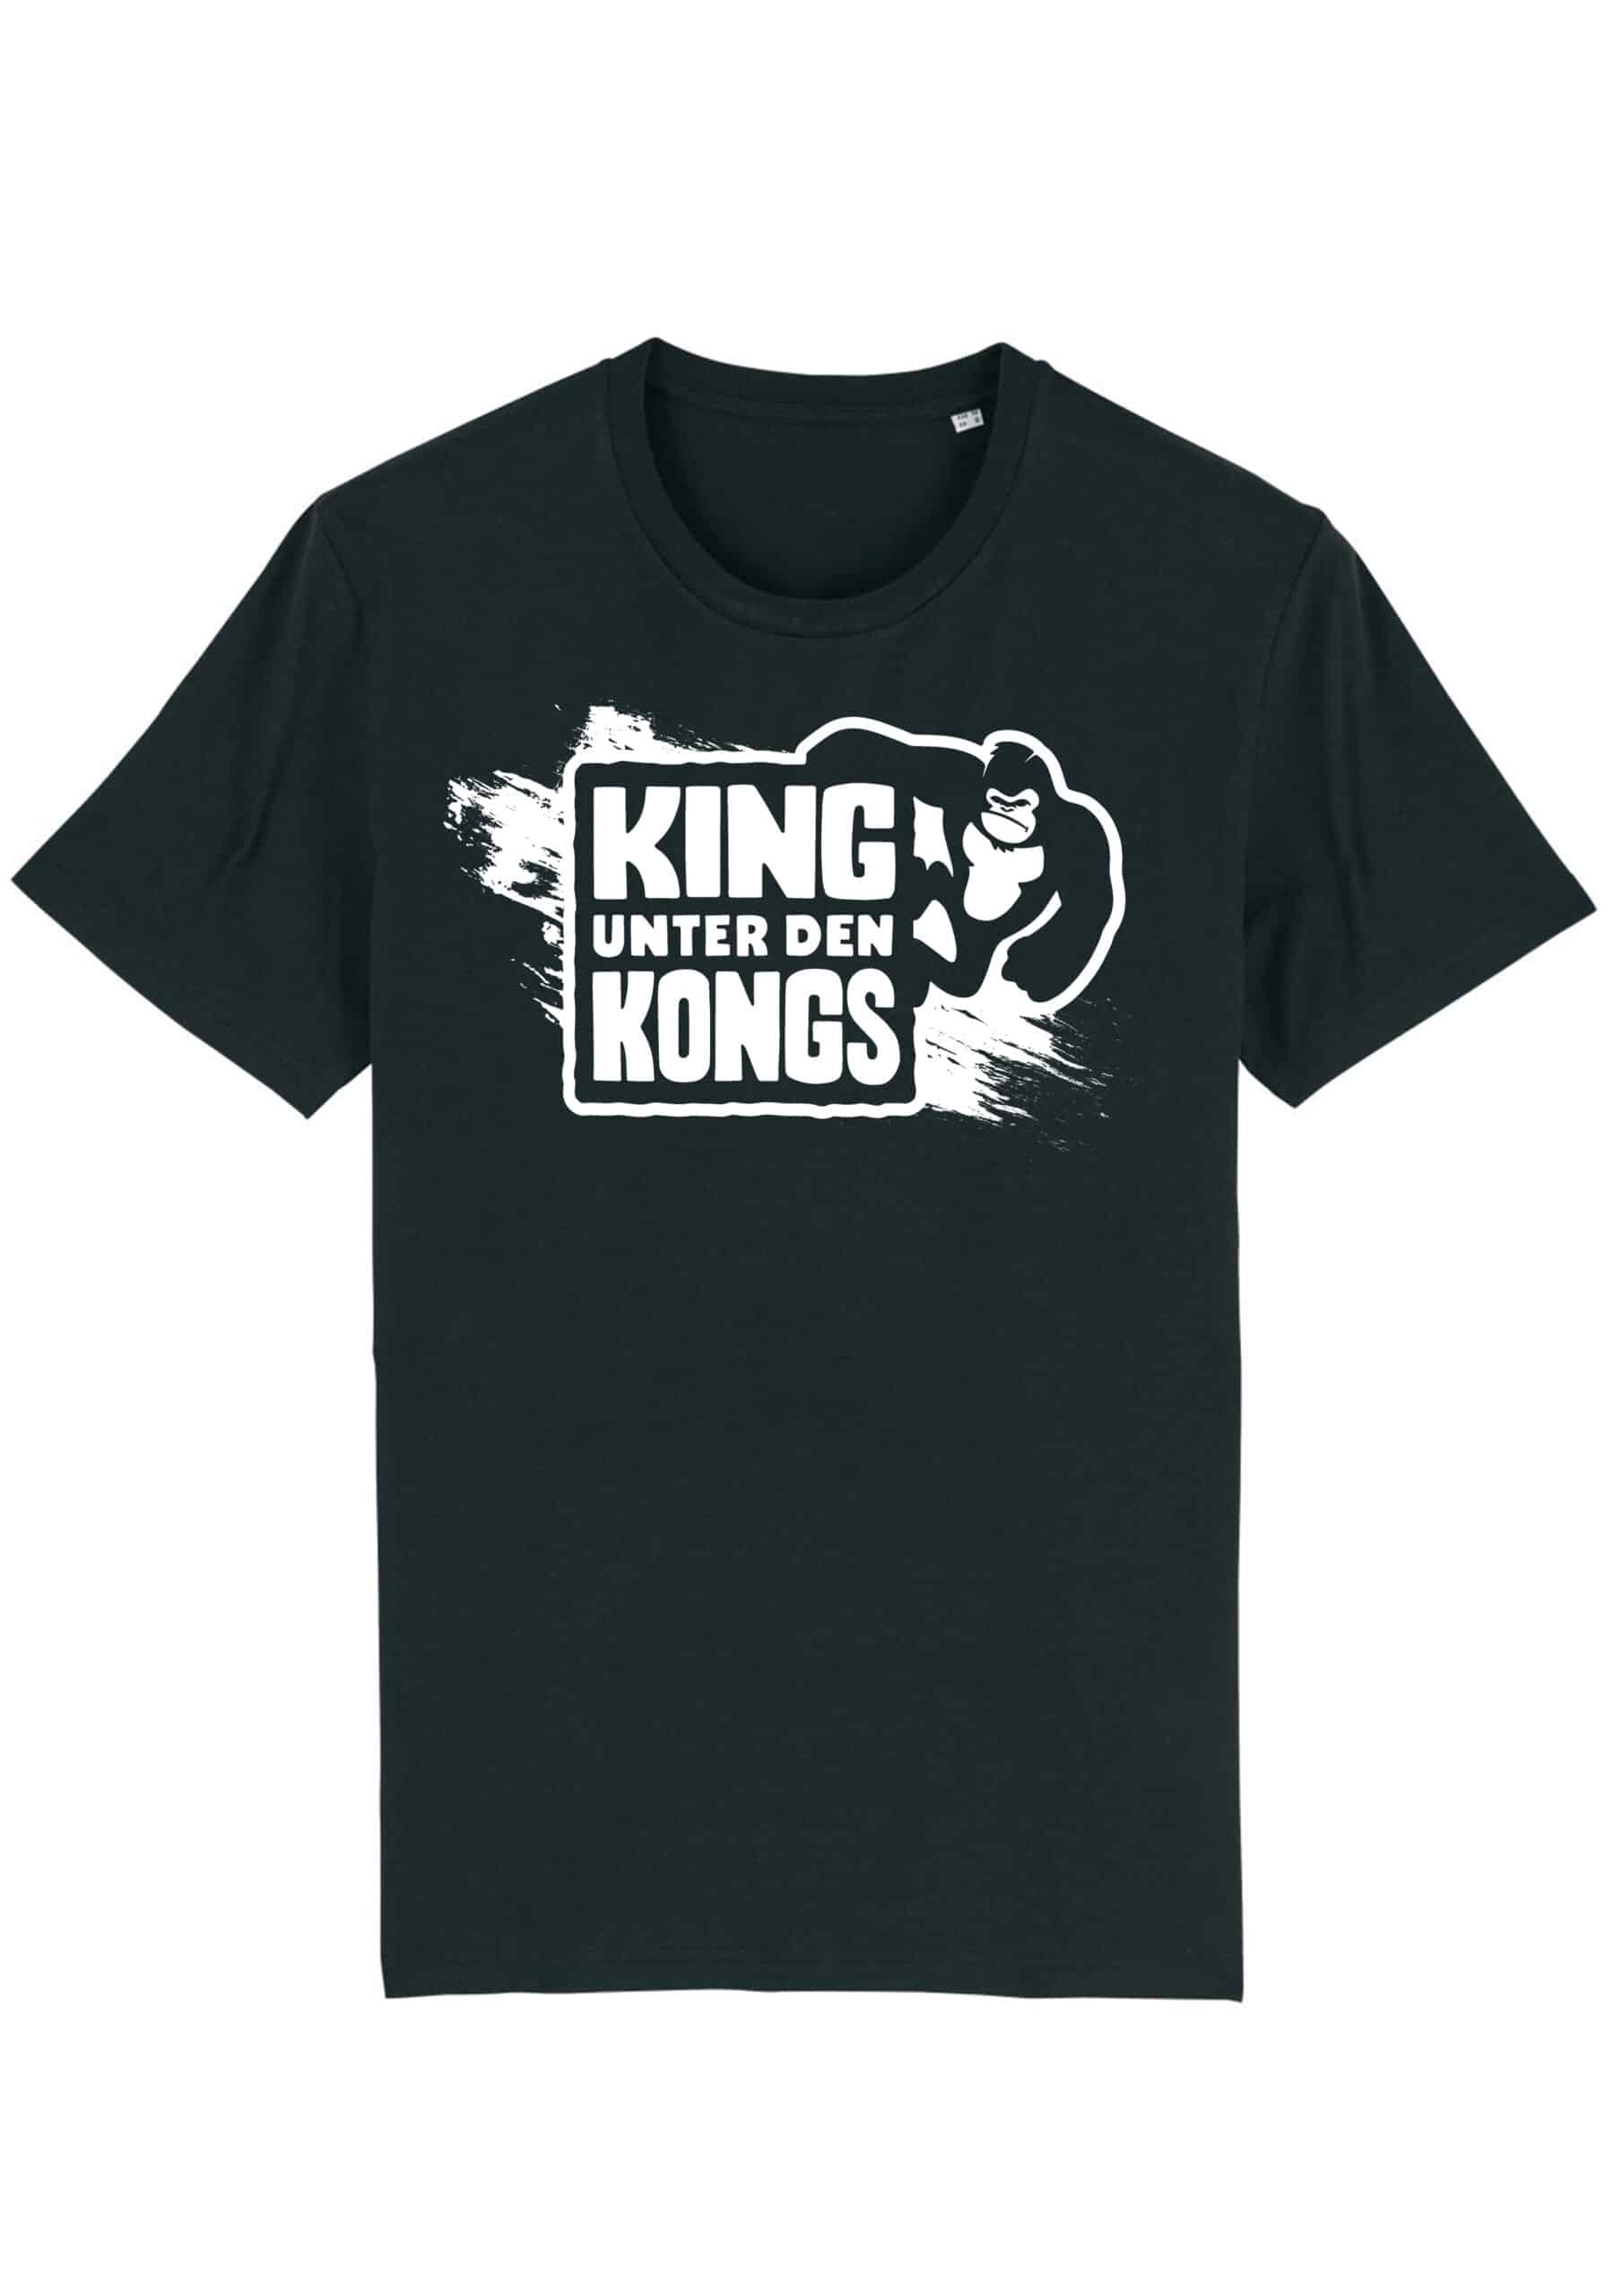 kudk logo scratch schwarz scaled 1 Philip Schlaffer - King unter den Kongs